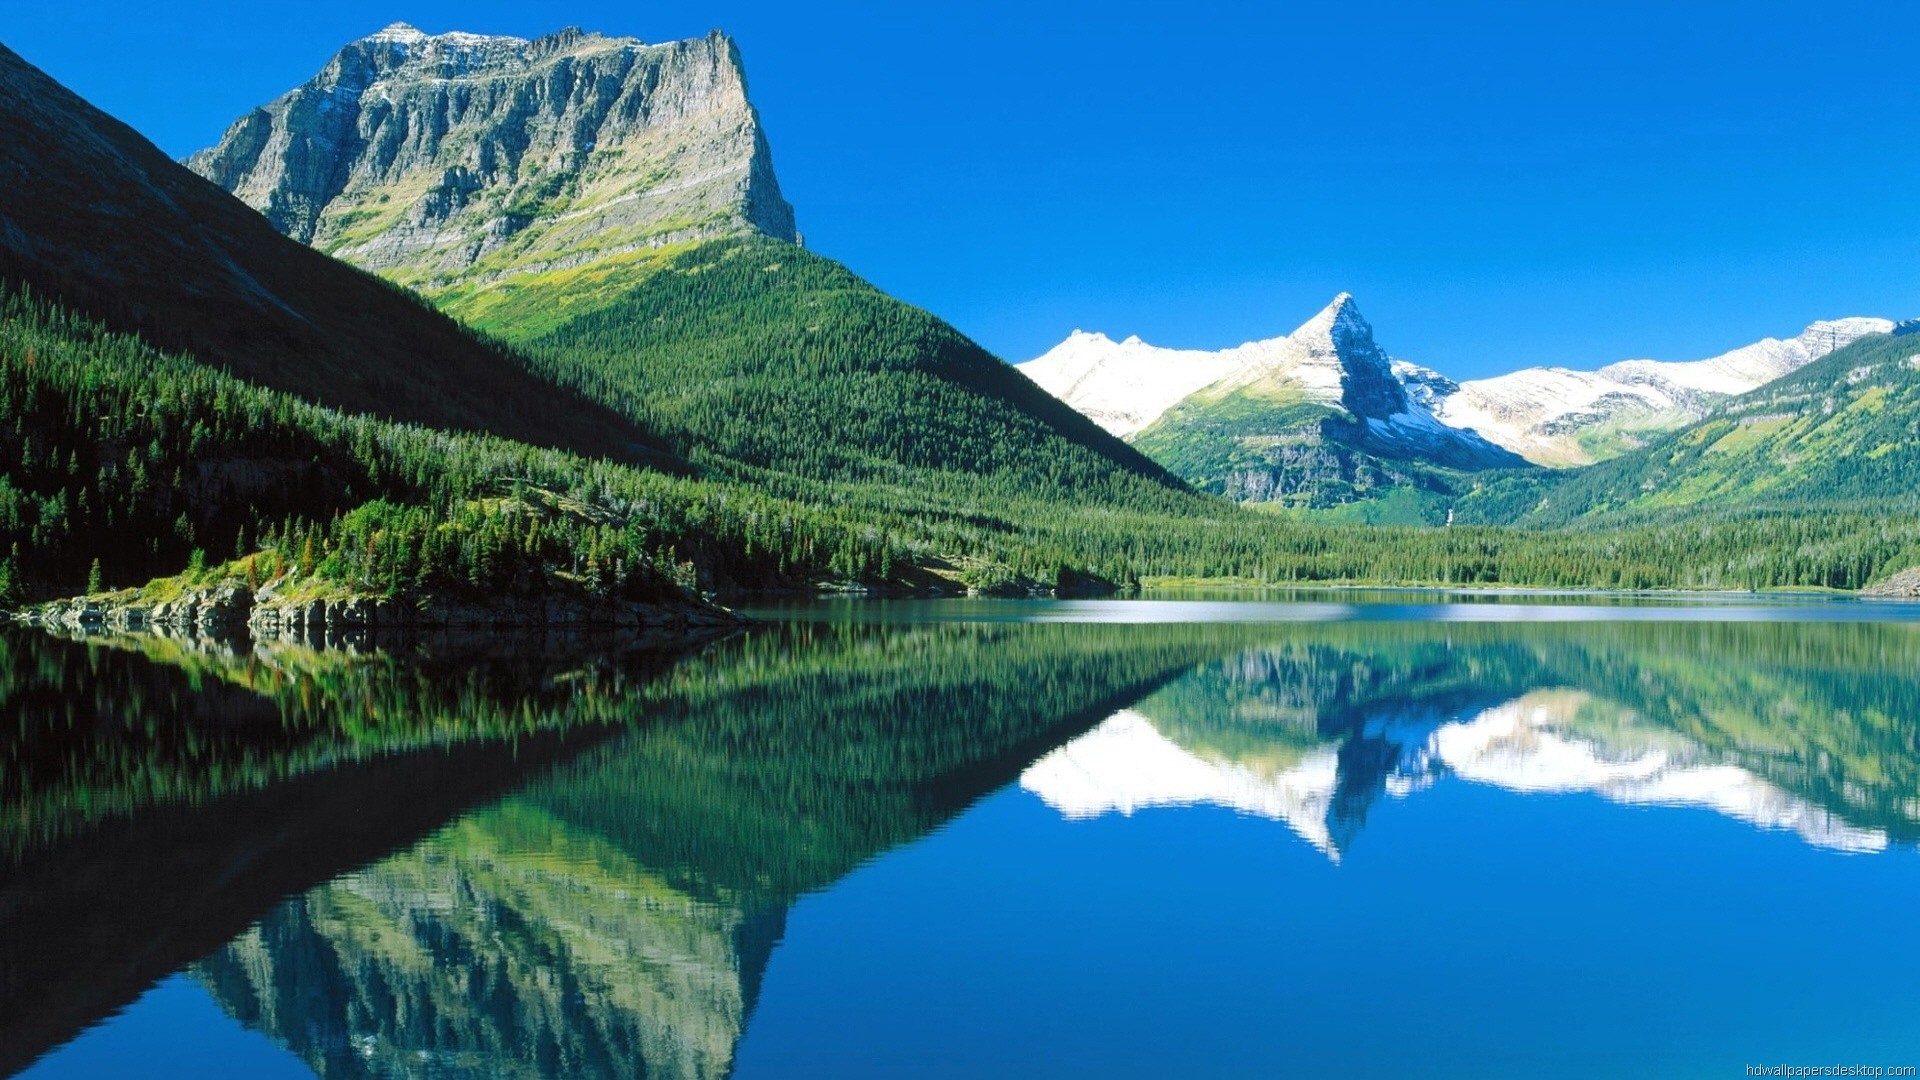 hd wallpaper 1080p download,mountainous landforms,natural landscape,mountain,nature,reflection